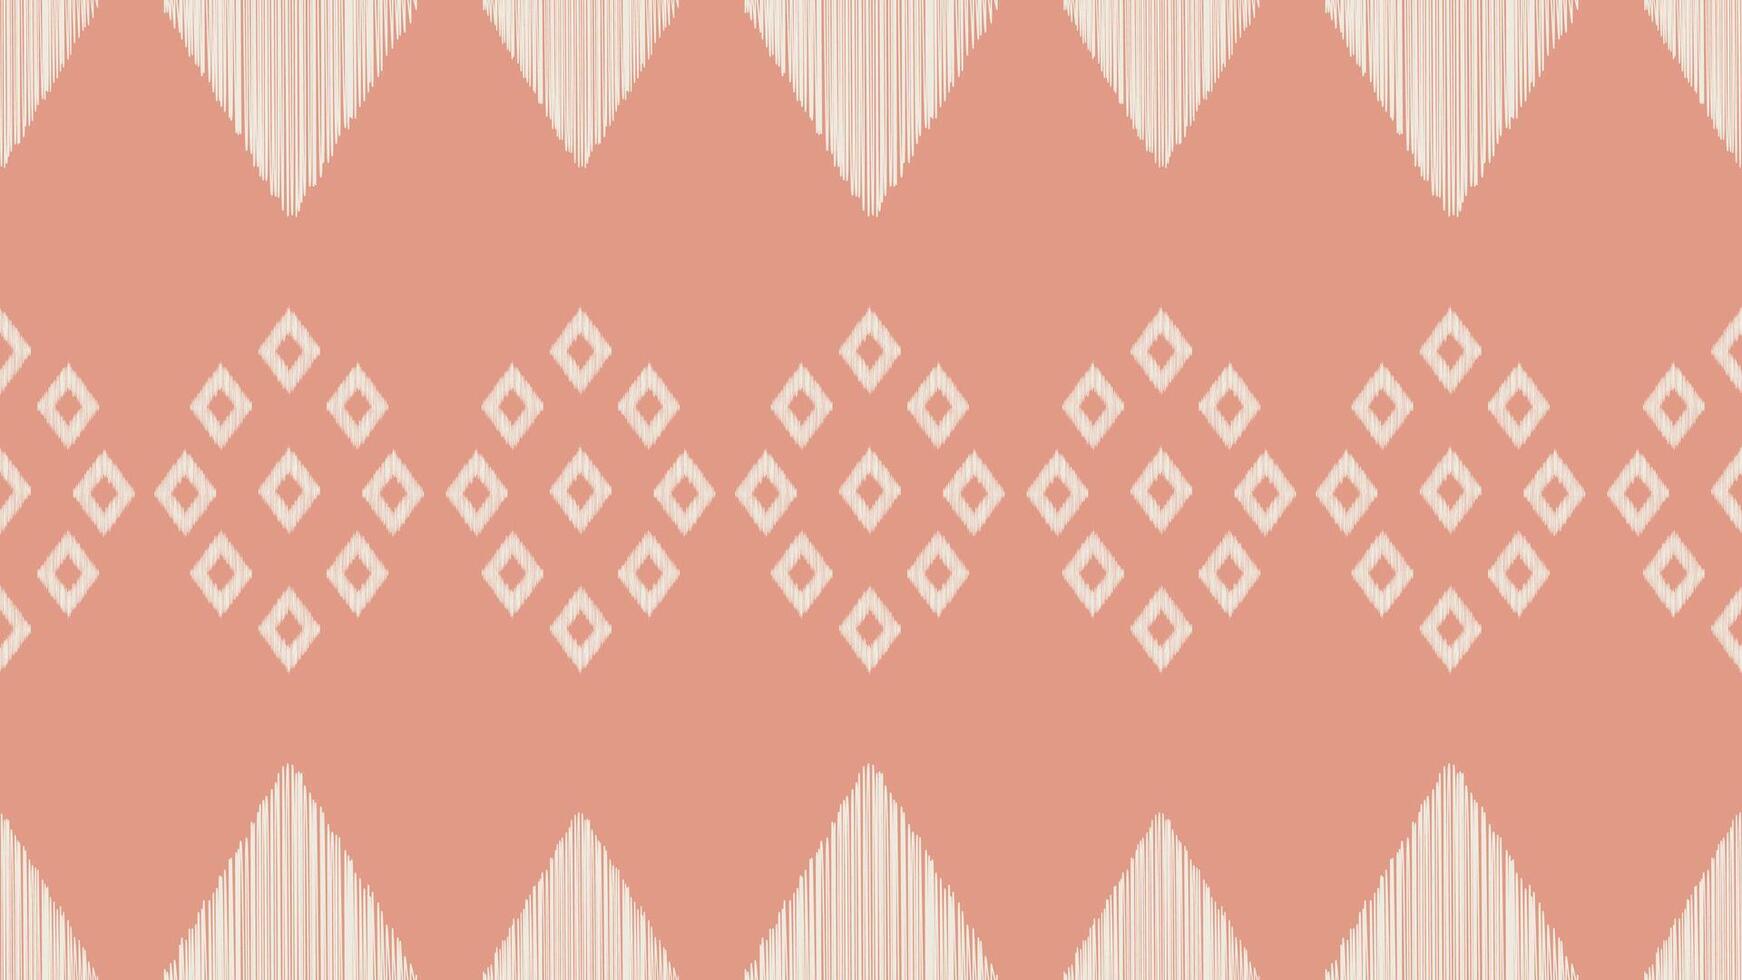 traditionell etnisk ikat motiv tyg mönster bakgrund geometrisk .ikat broderi etnisk mönster rosa pastell reste sig rosa bakgrund tapet. abstrakt, vektor, illustration.texture, ram, dekoration. vektor